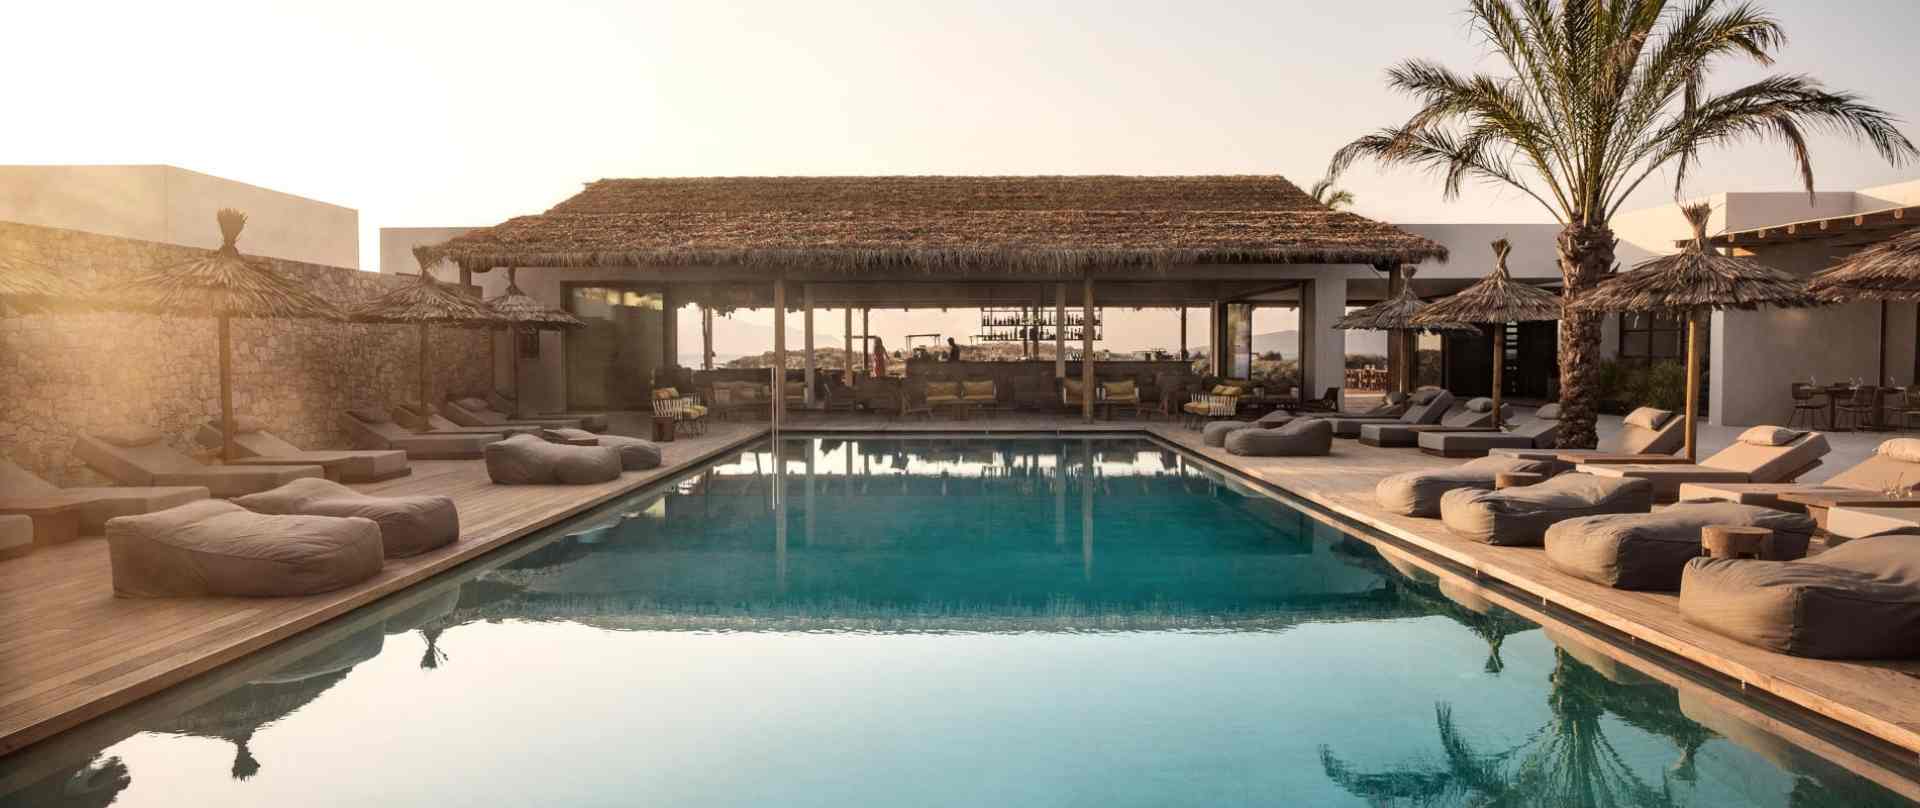 OKU Kos Beach Resort: Pool mit Chillout Area